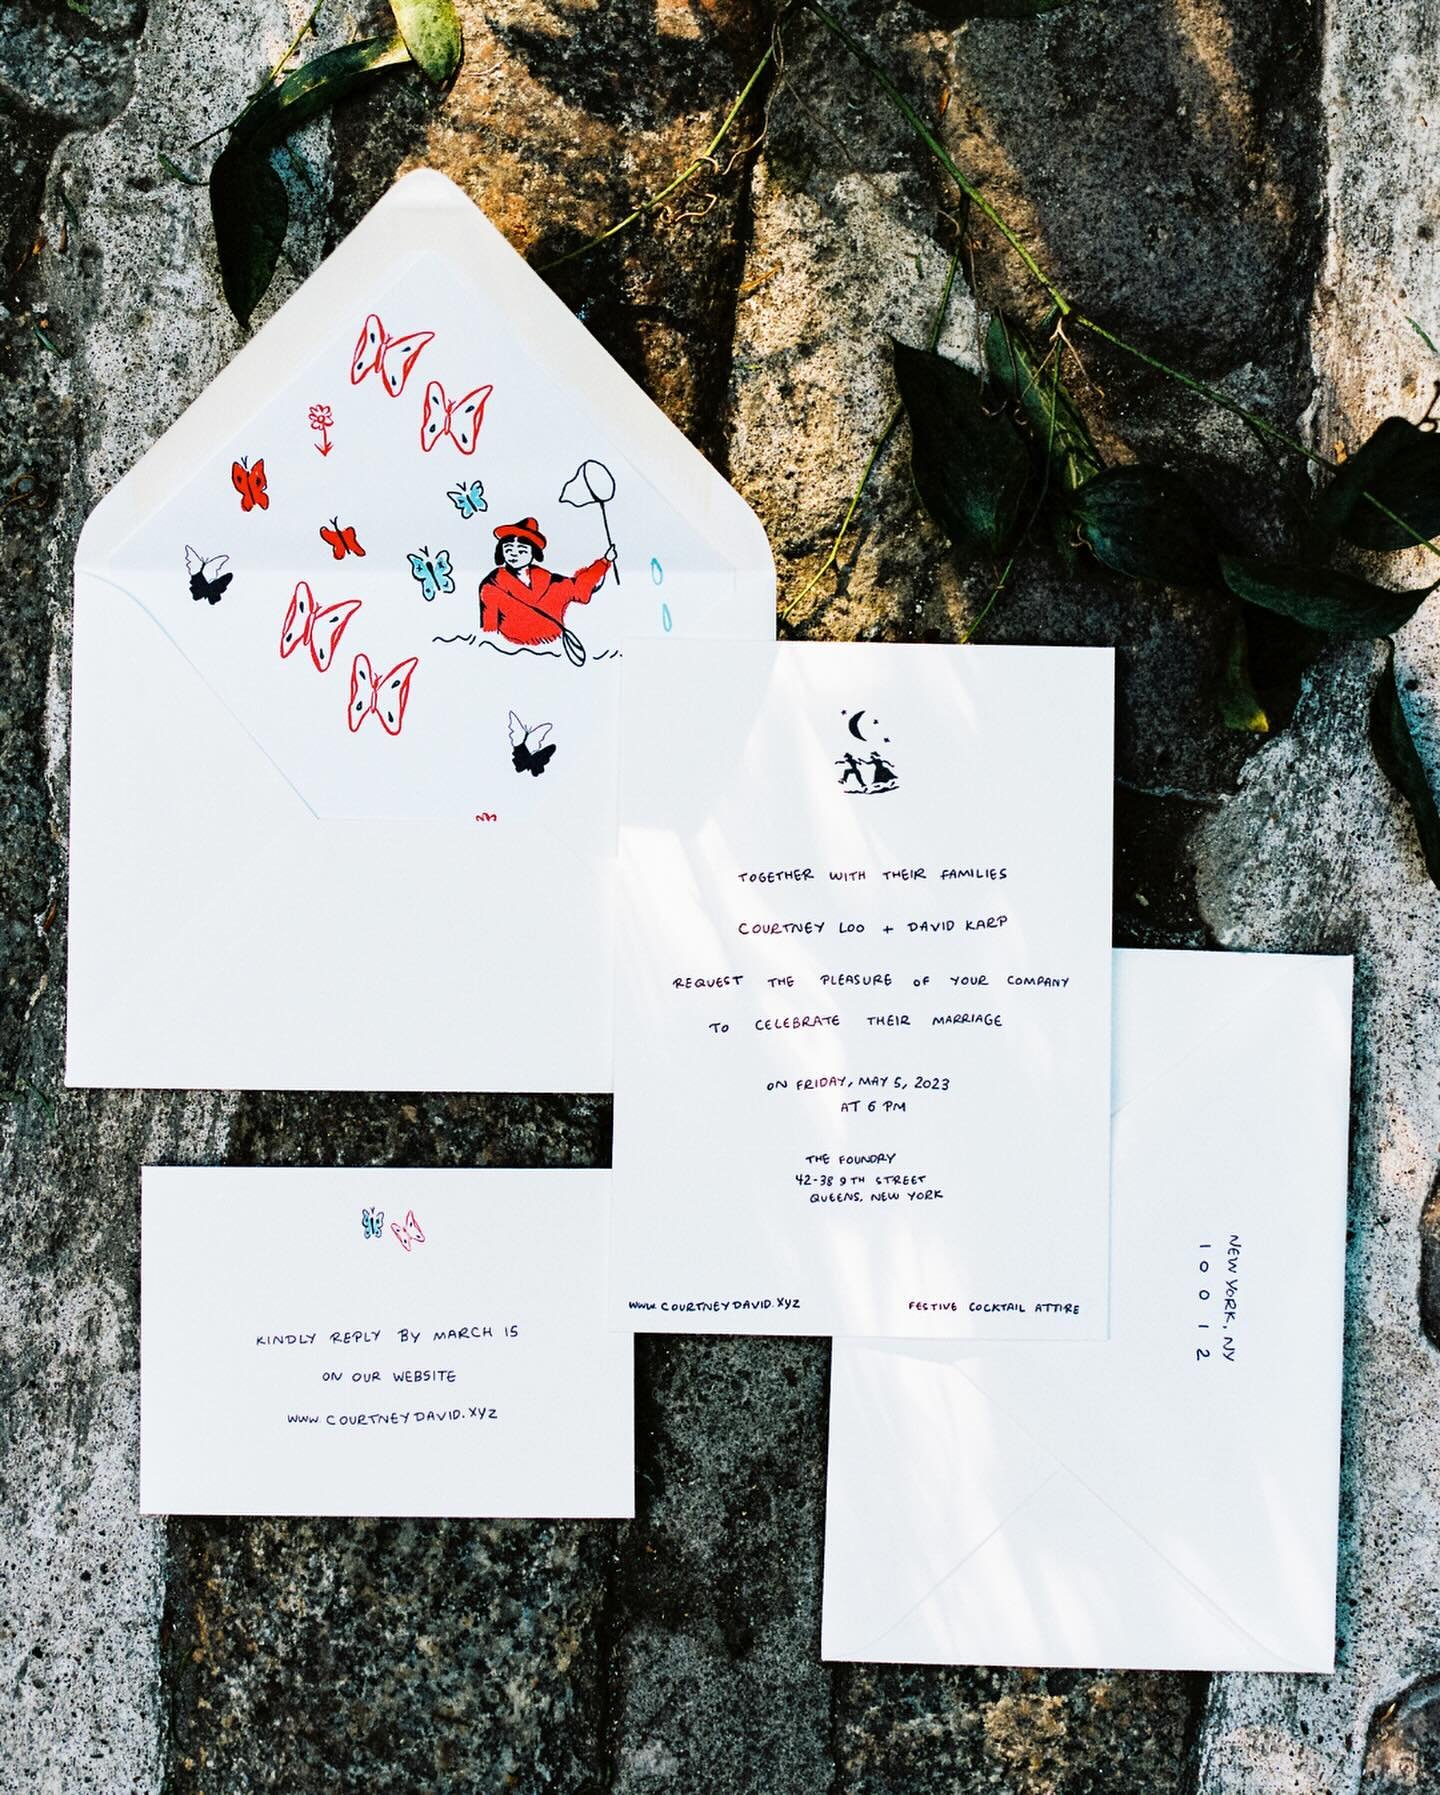 Reminiscing over C+D&rsquo;s completed customized and unique wedding details.

Photographer: @aj.tamari
Venue: @the_foundrylic
Invitations: @rabbitrabbitdesignhouse

#rachelbeharevents #rbe #nycwedding #nycweddingplanner #nyceventdesigner #nyceventpl